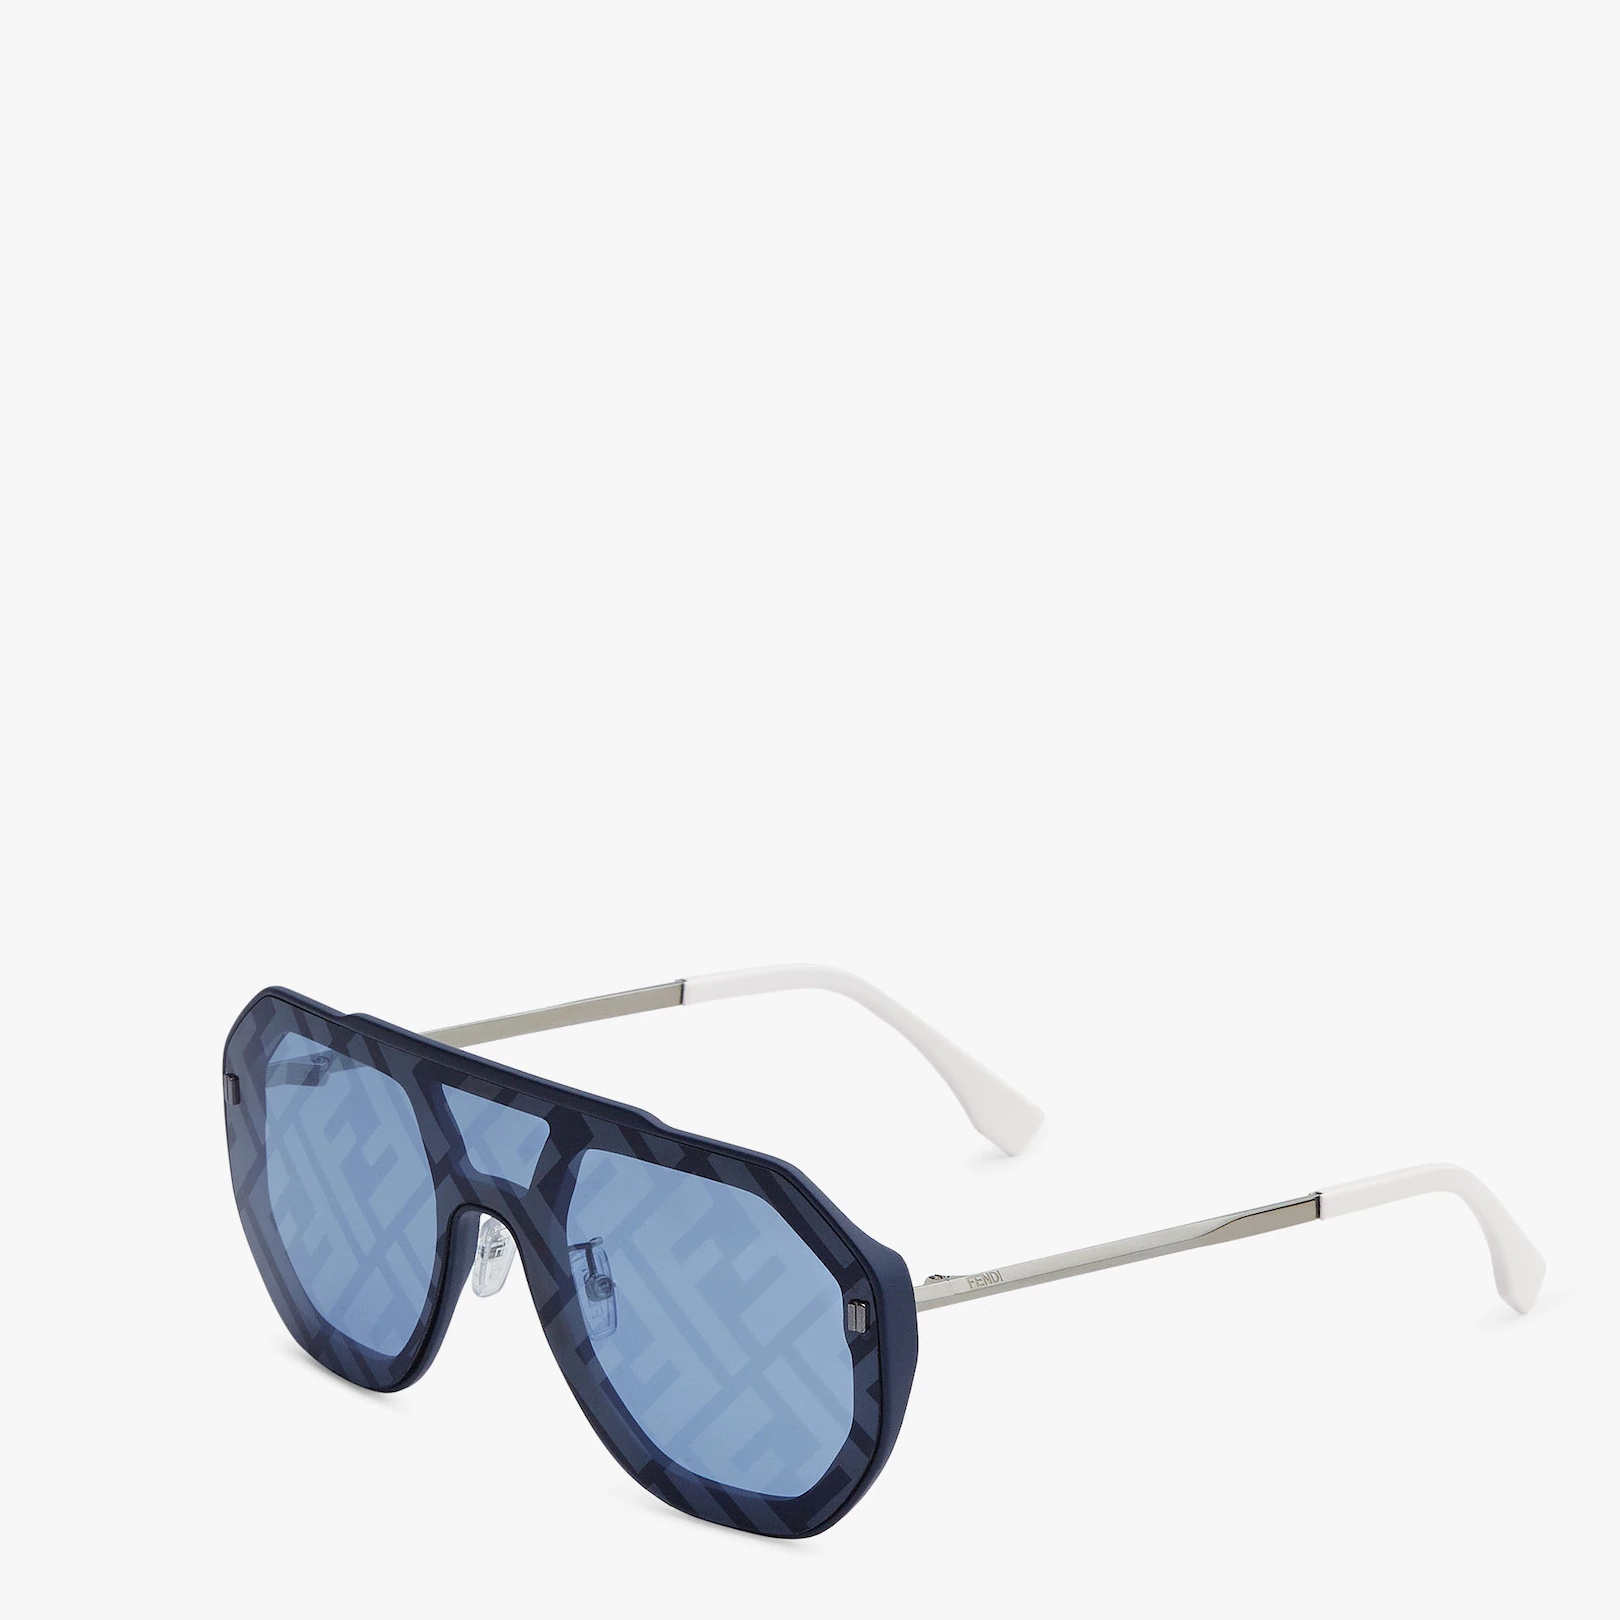 Blue sunglasses - 2